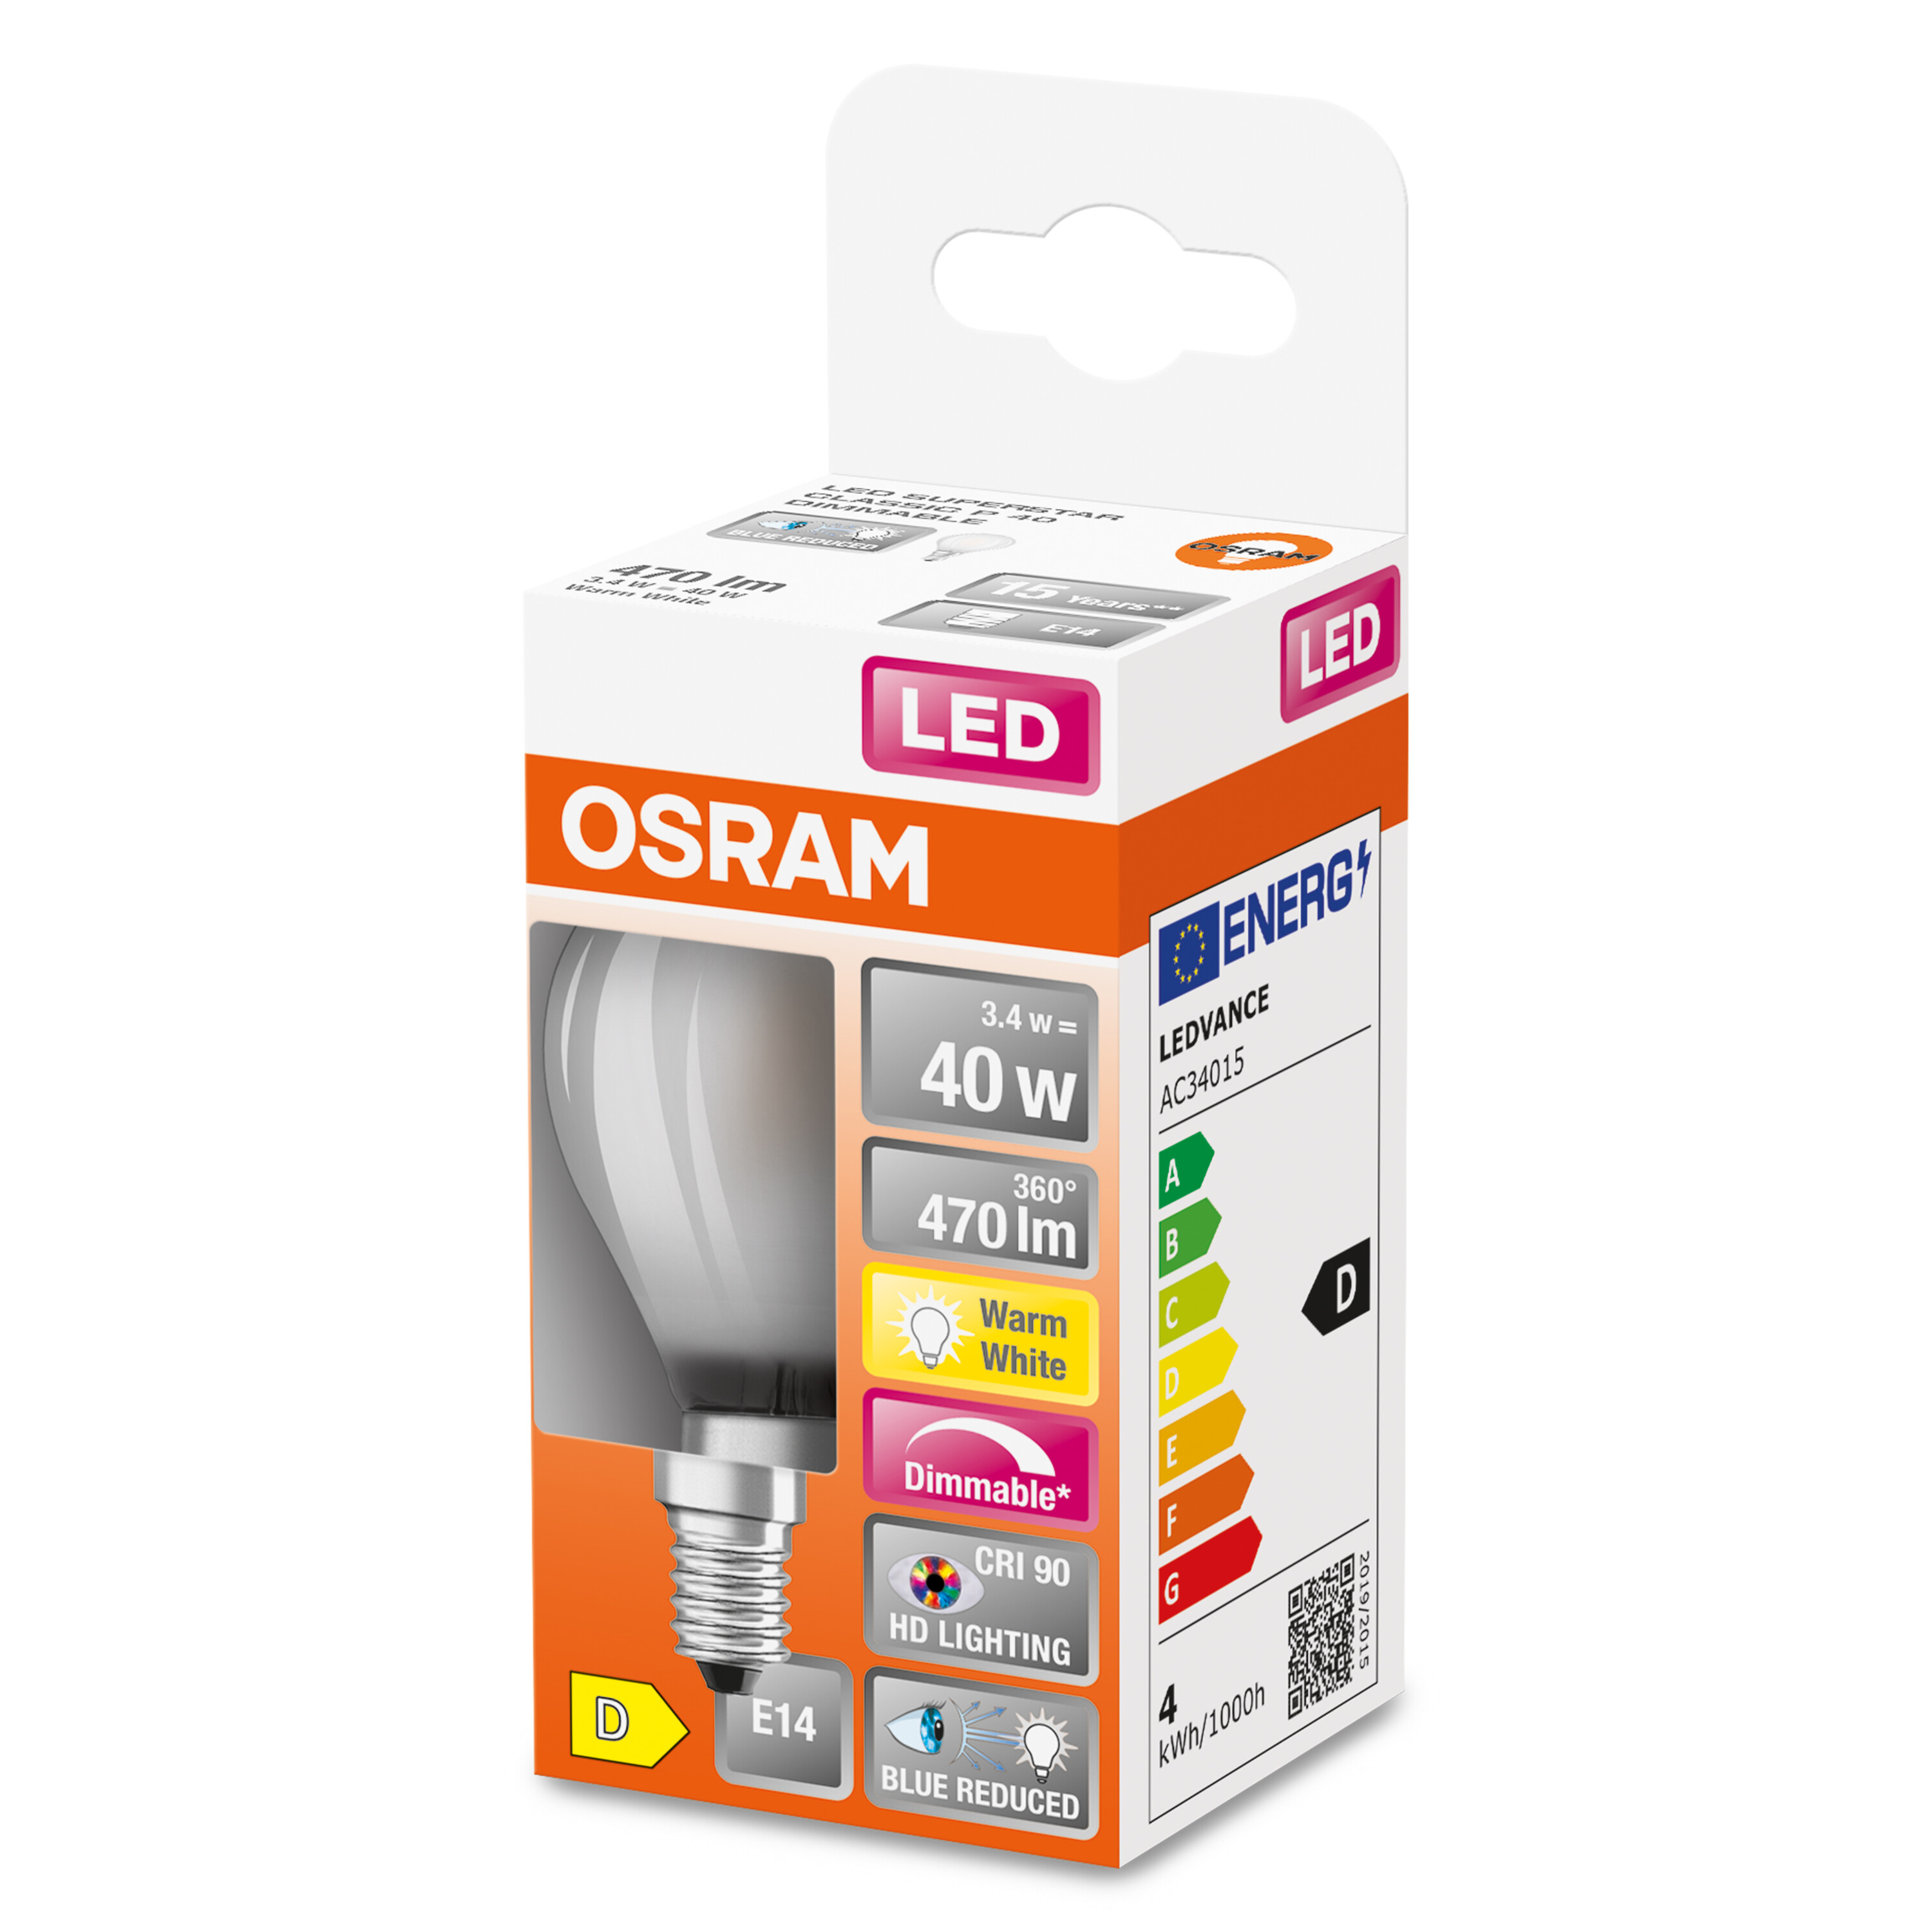 OSRAM  LED SUPERSTAR PLUS Lumen P FILAMENT 470 Warmweiß Lampe CLASSIC LED